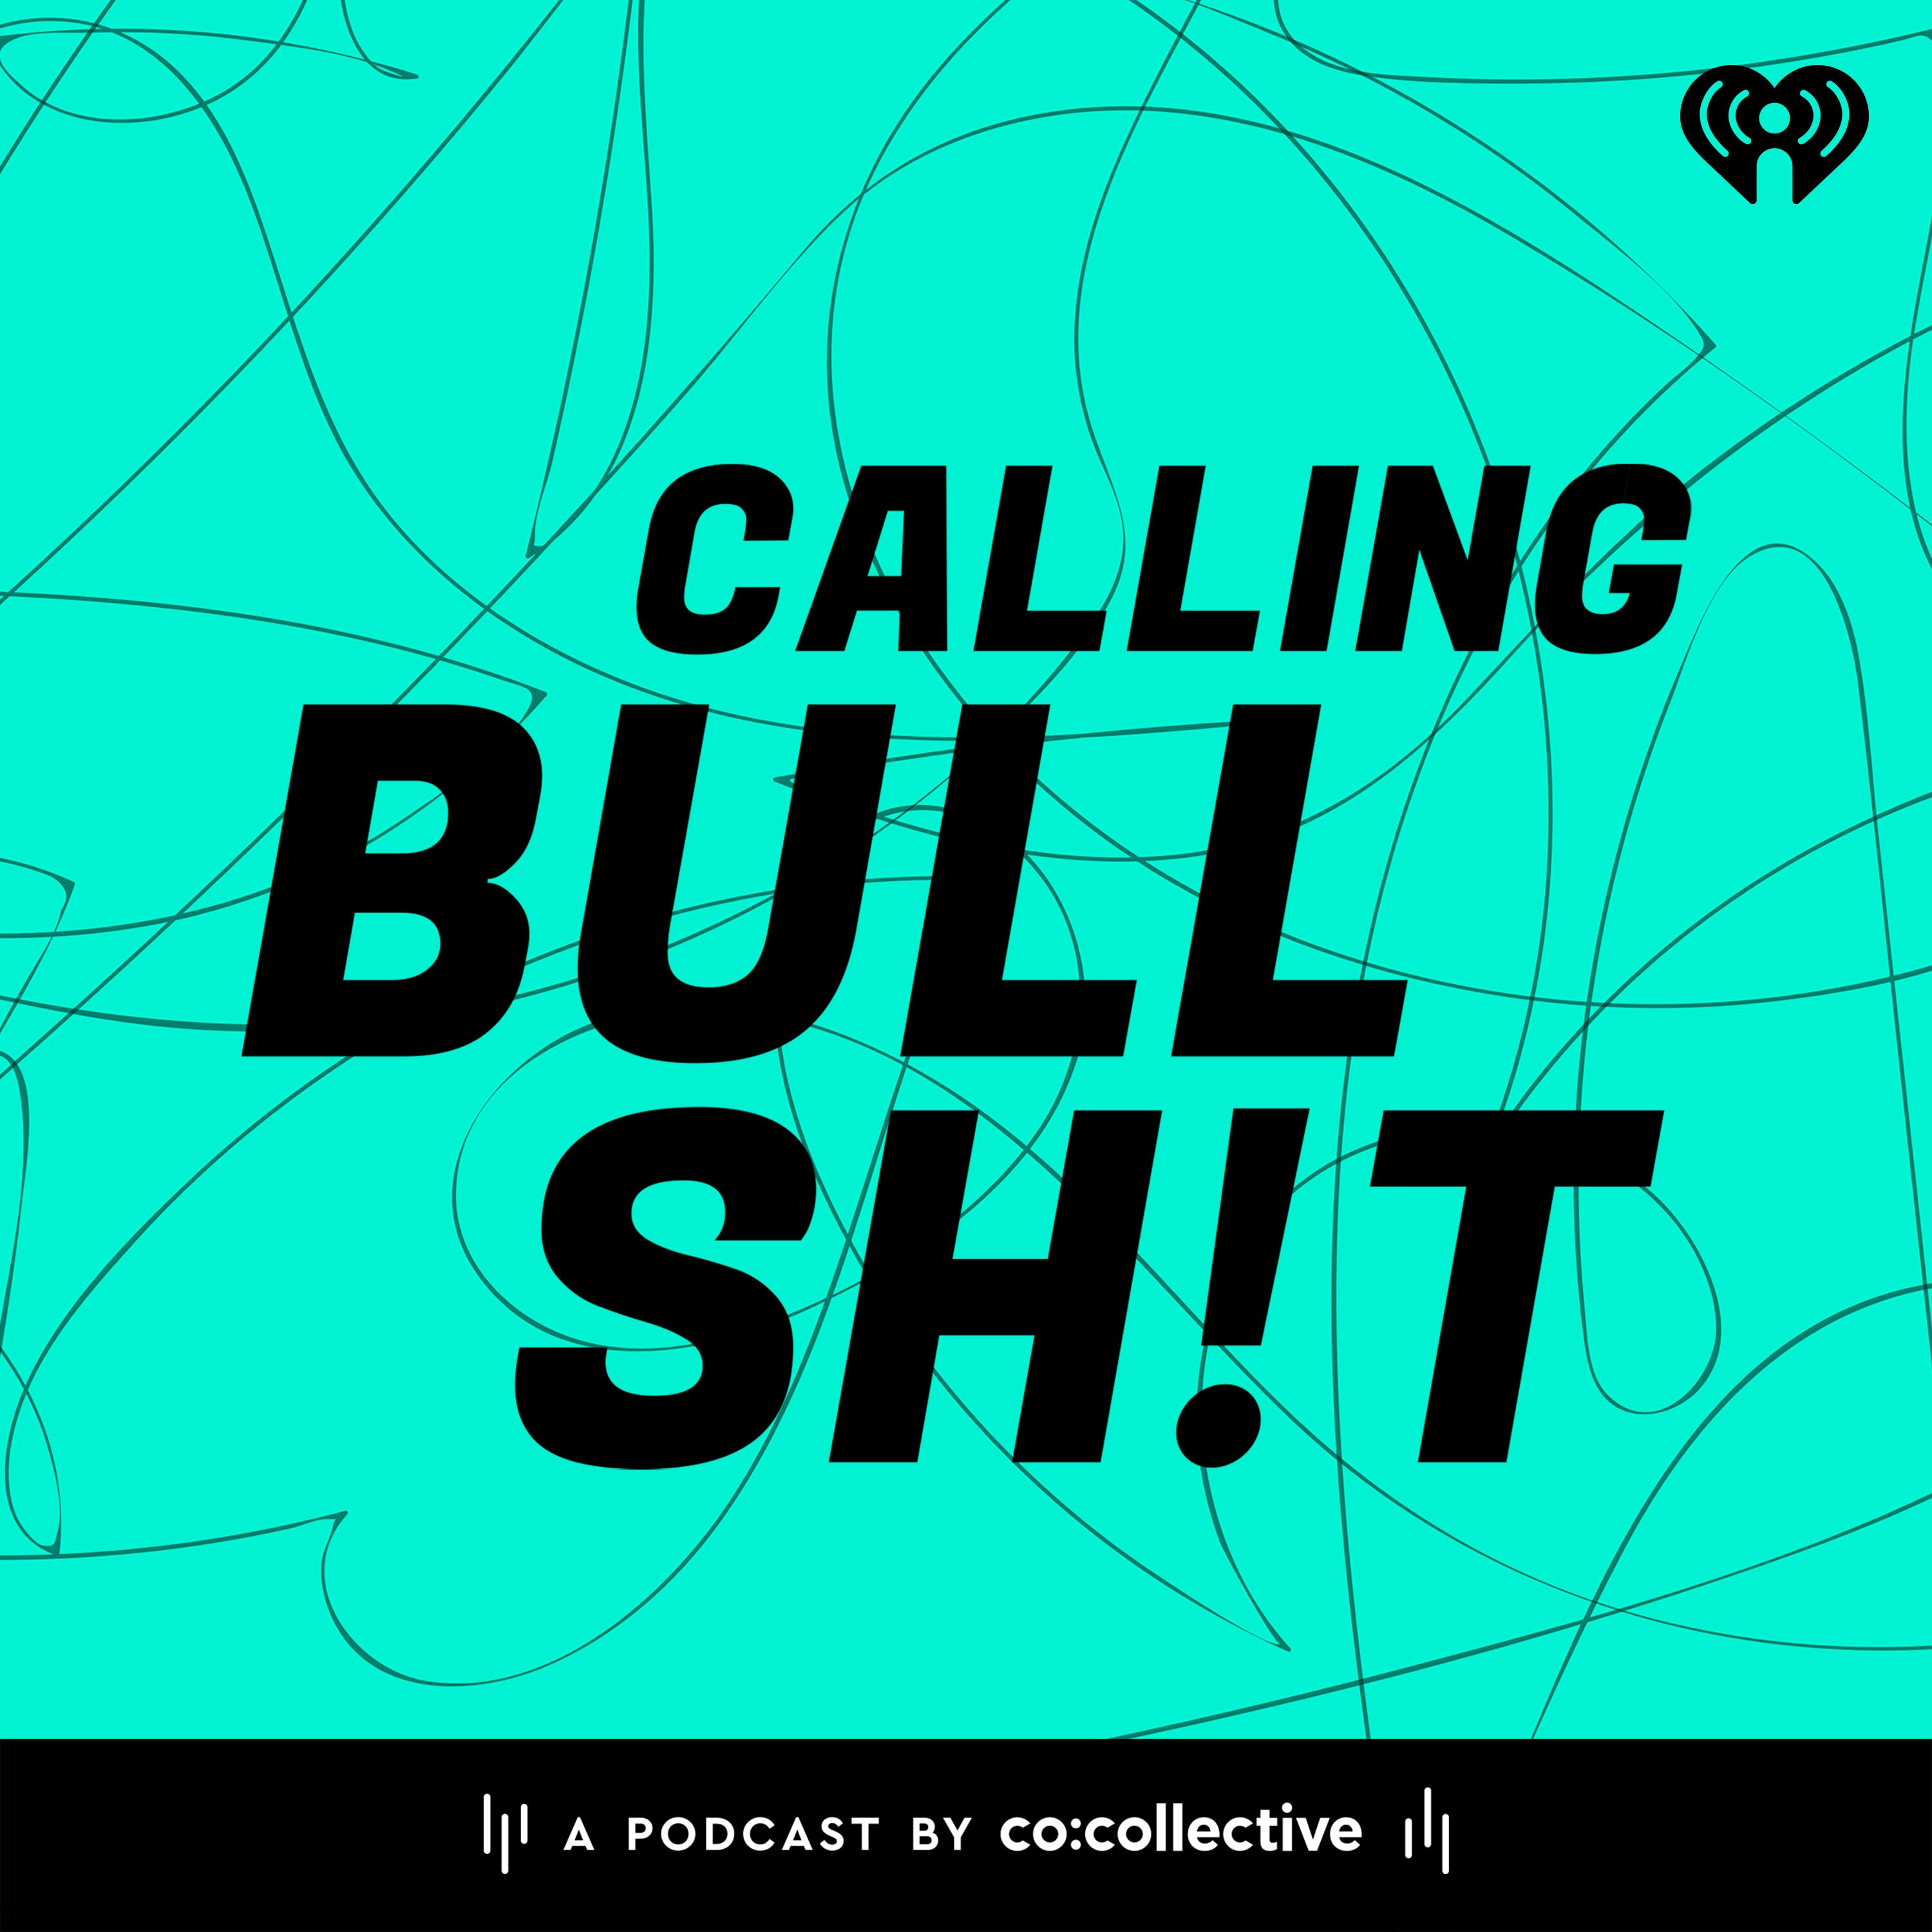 Calling Bullsh!t:iHeartPodcasts